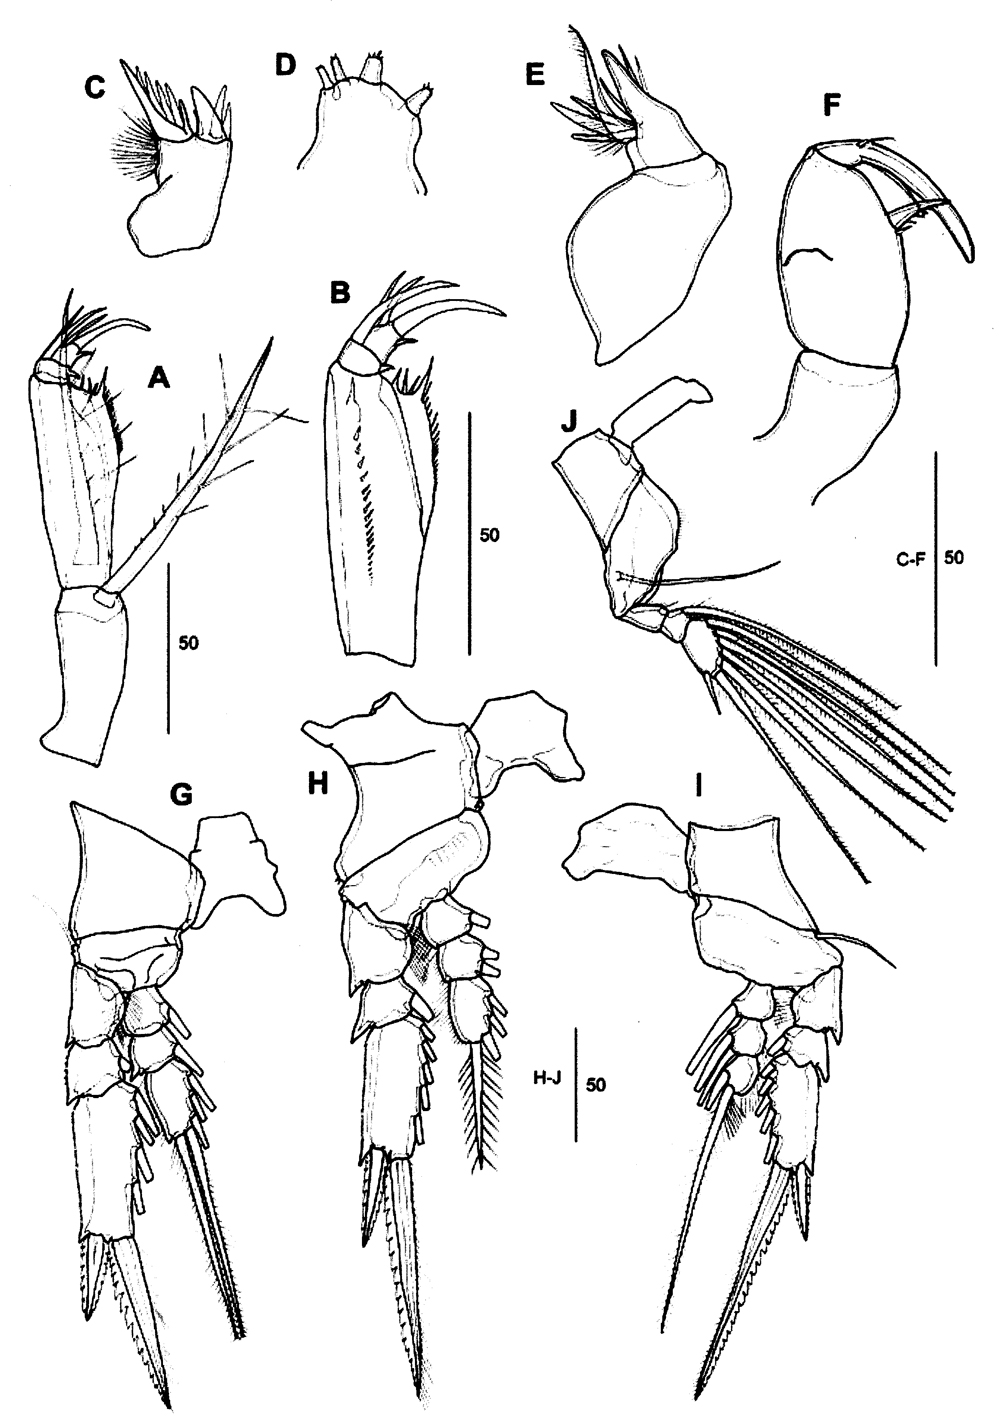 Species Farranula carinata - Plate 13 of morphological figures